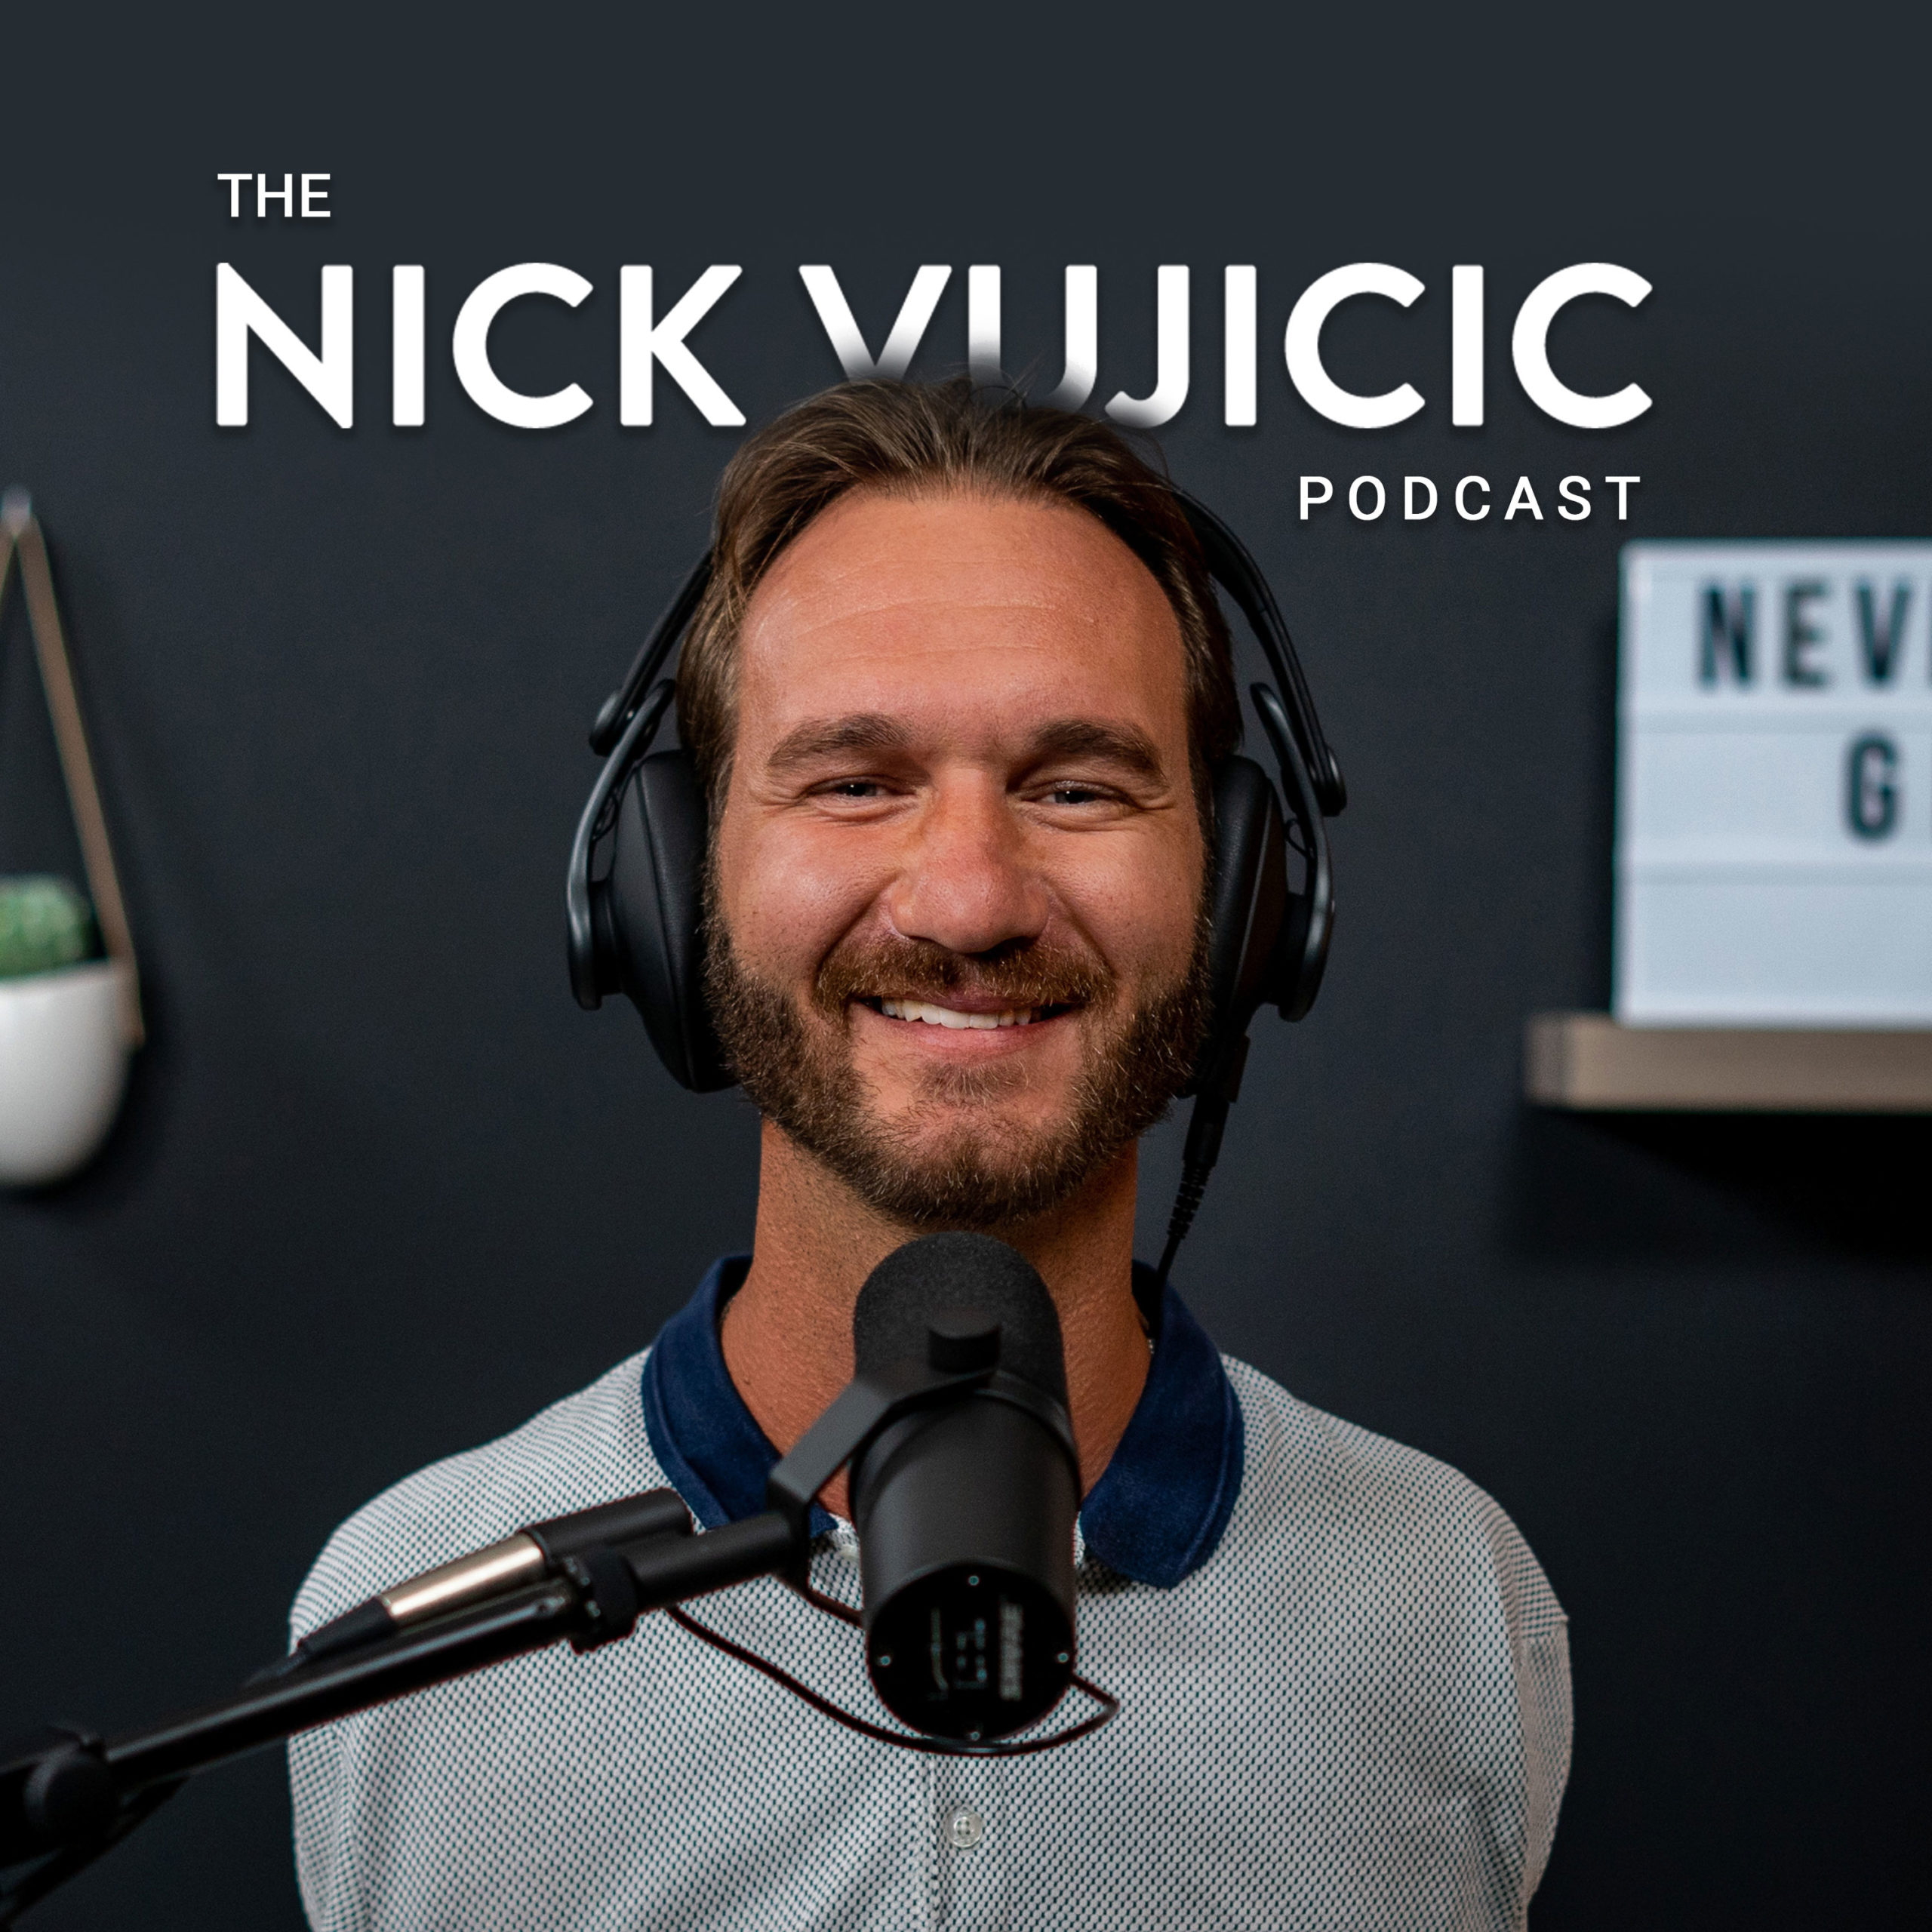 The Nick Vujicic Podcast